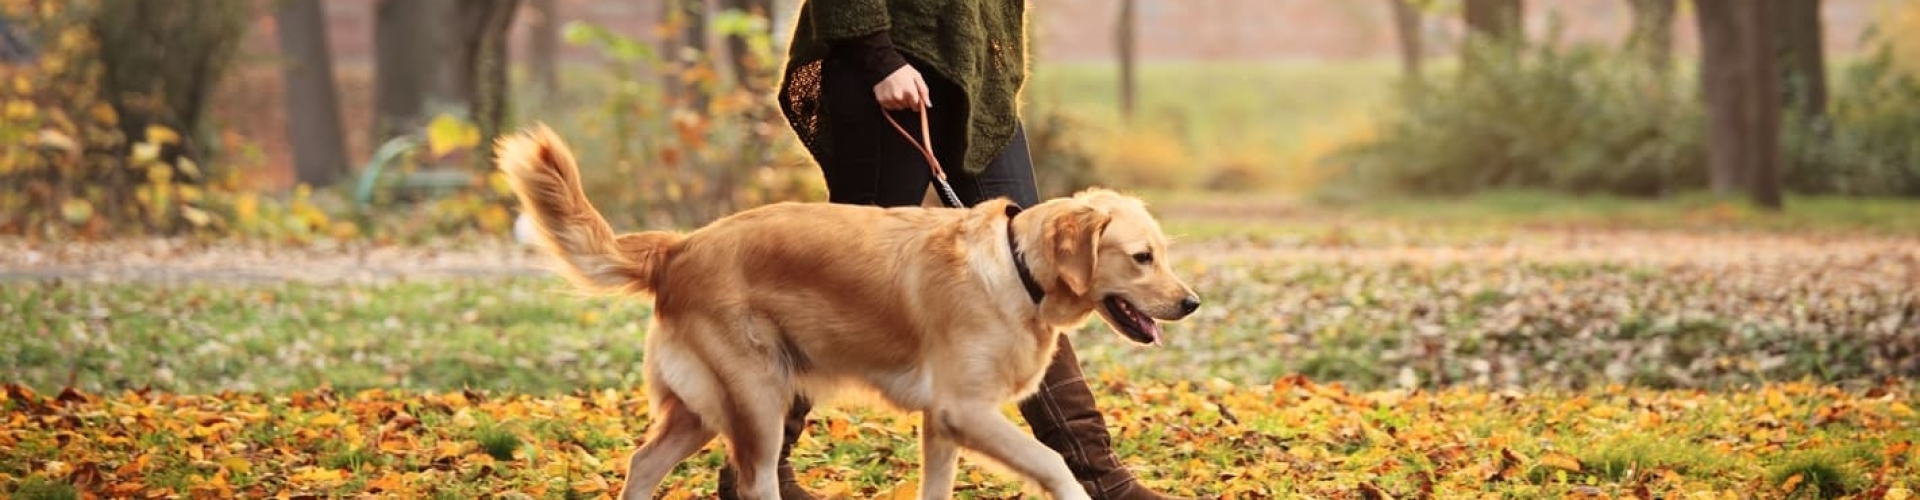 Opleiding om ontspannende natuurwandelingen voor mens en hond te organiseren